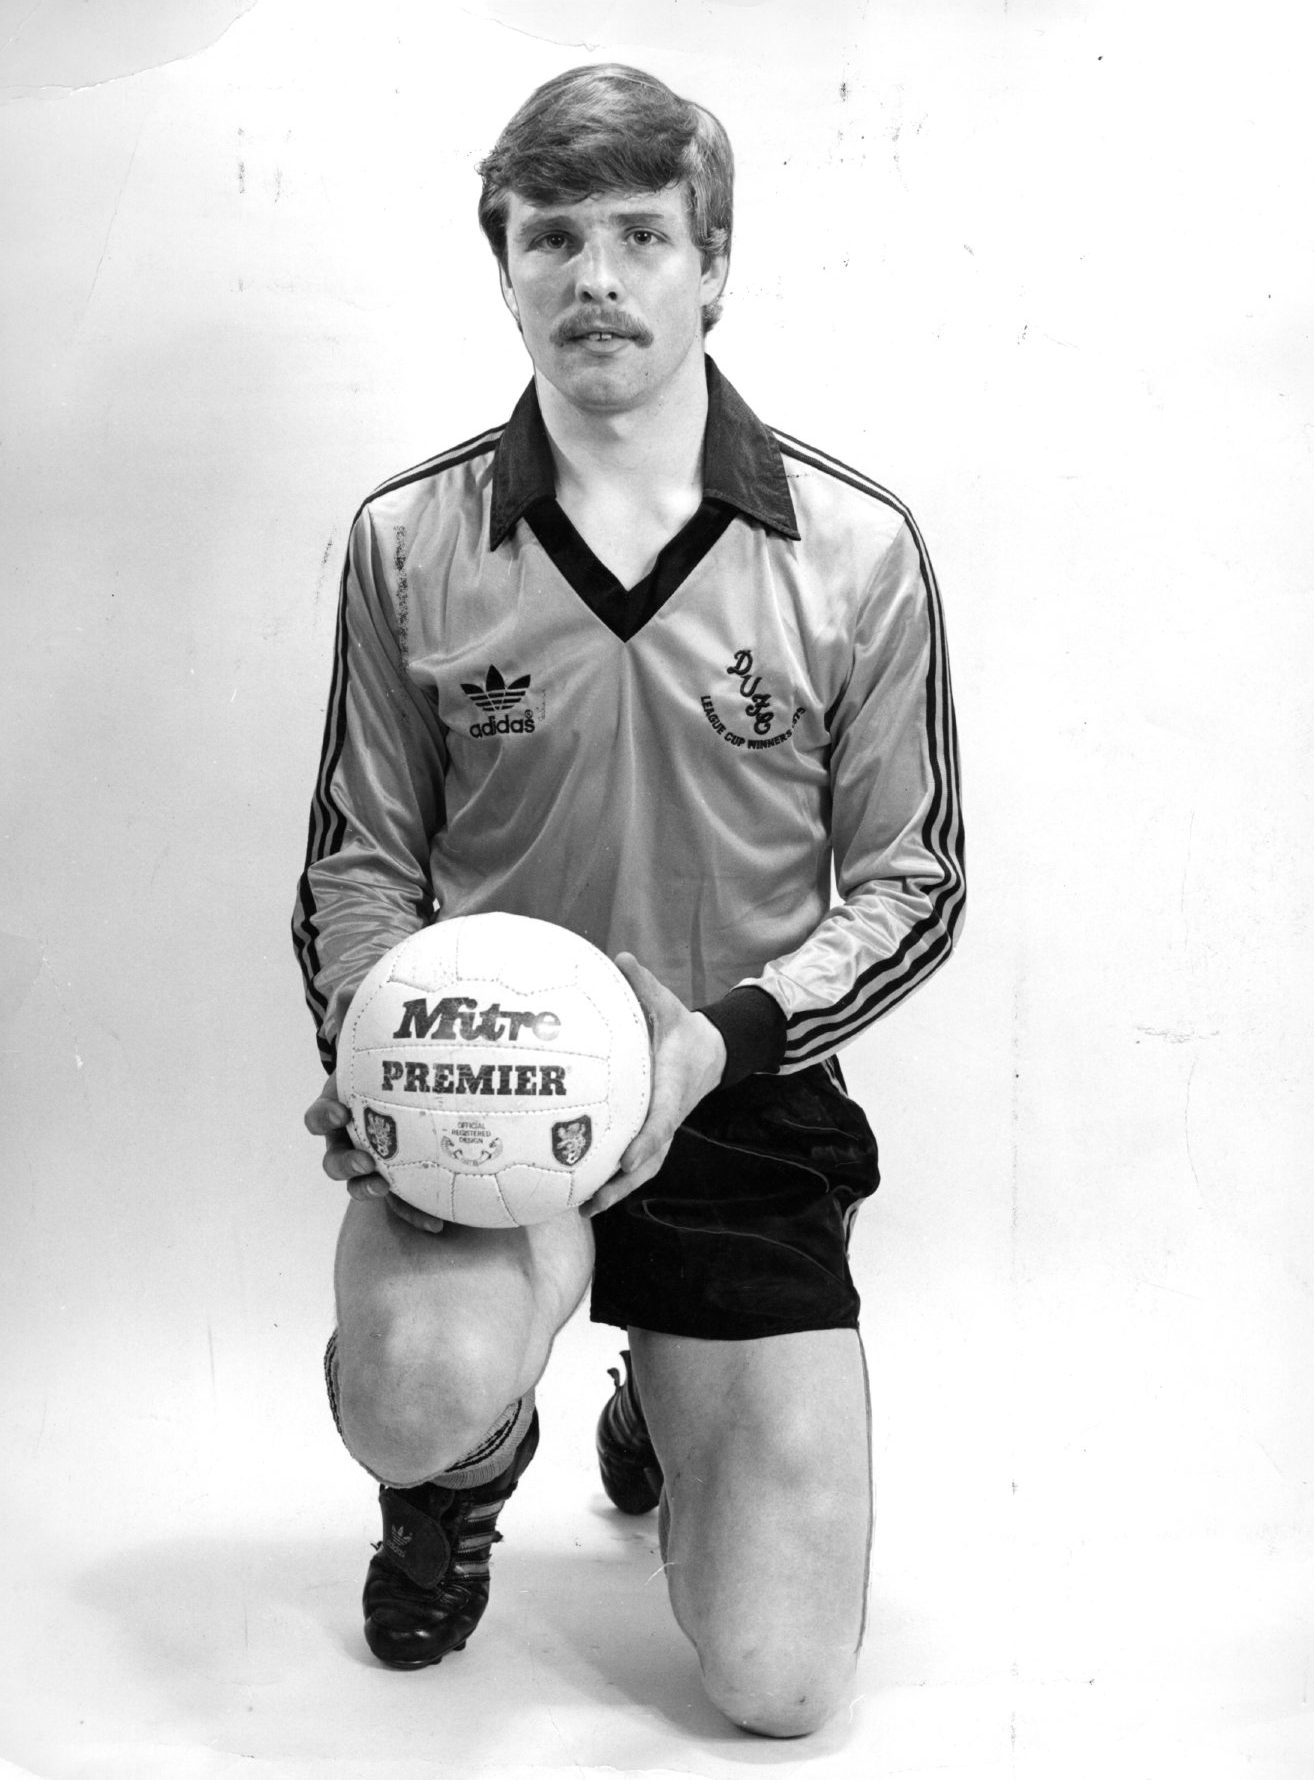 Derek Stark in his Tangerines kit and holding a football